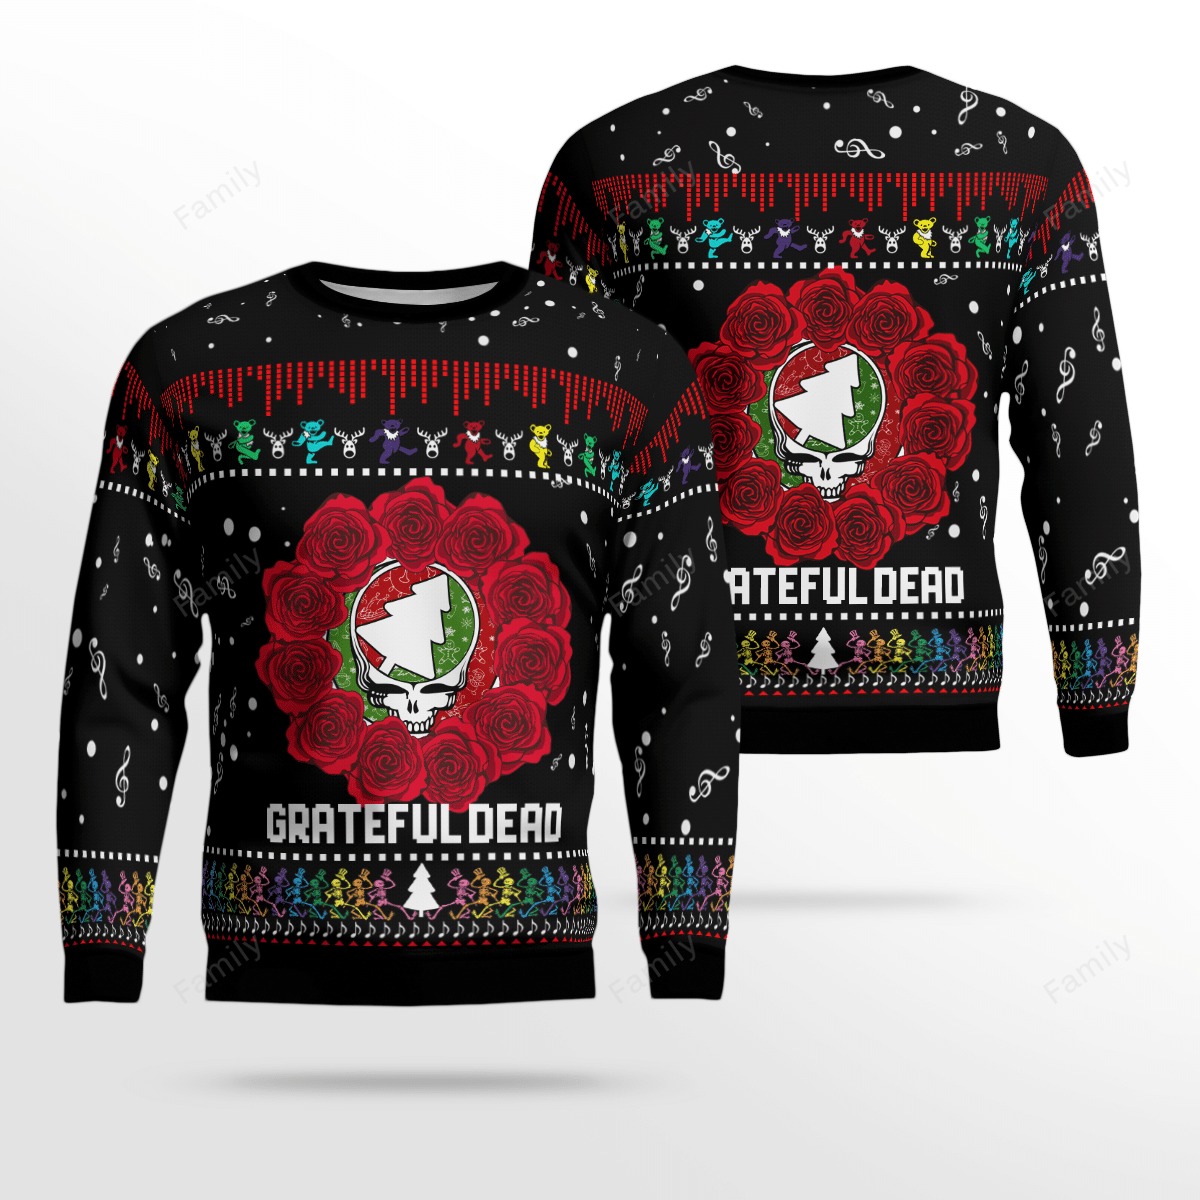 Grateful Dead dancing bears christmas sweater